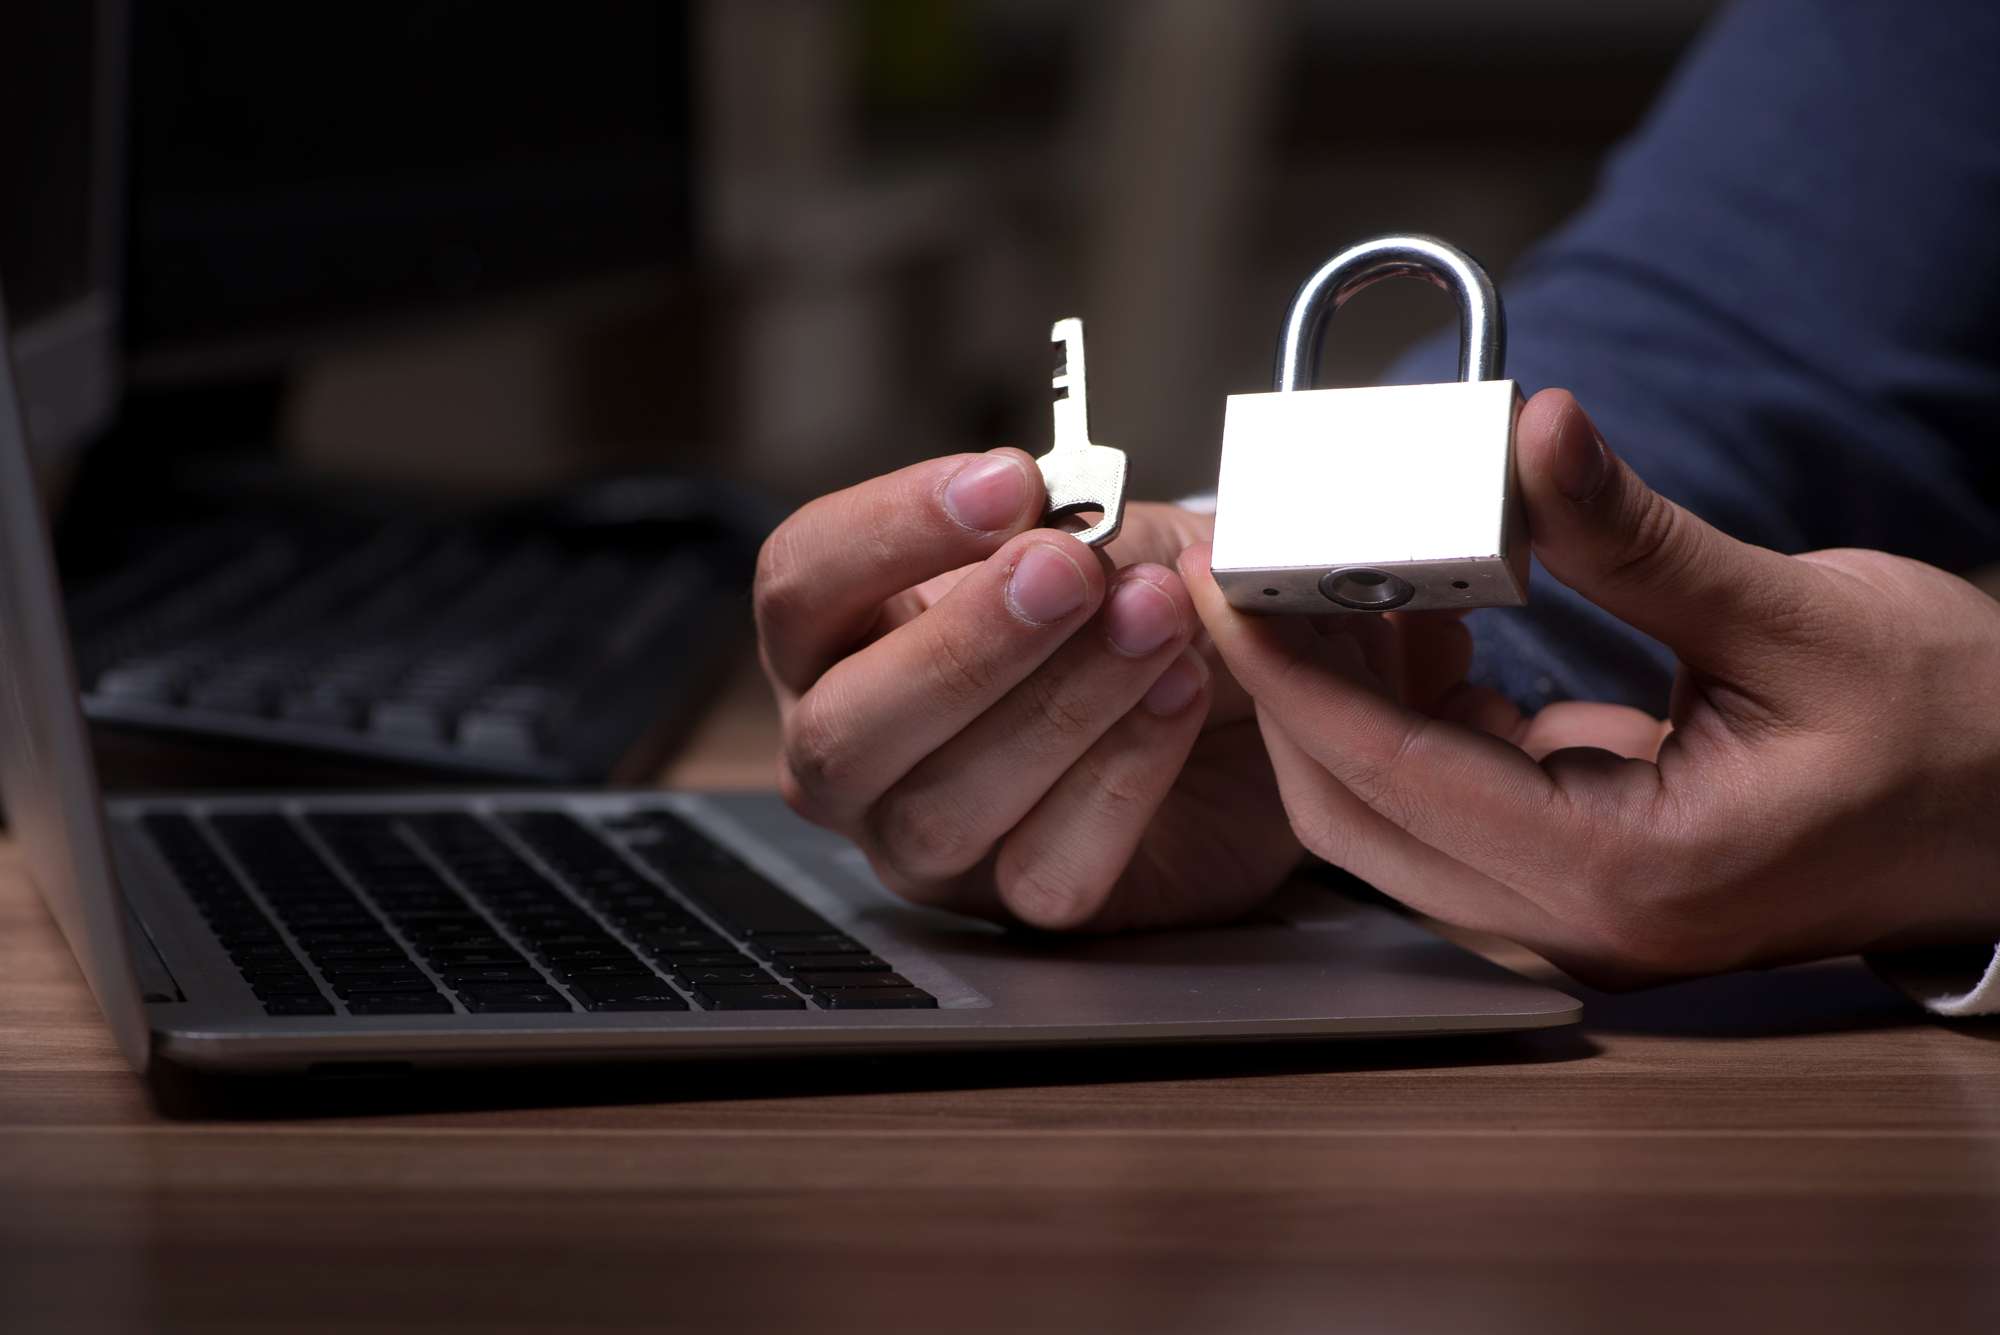 ransomware update showing hacker unlocking a padlock